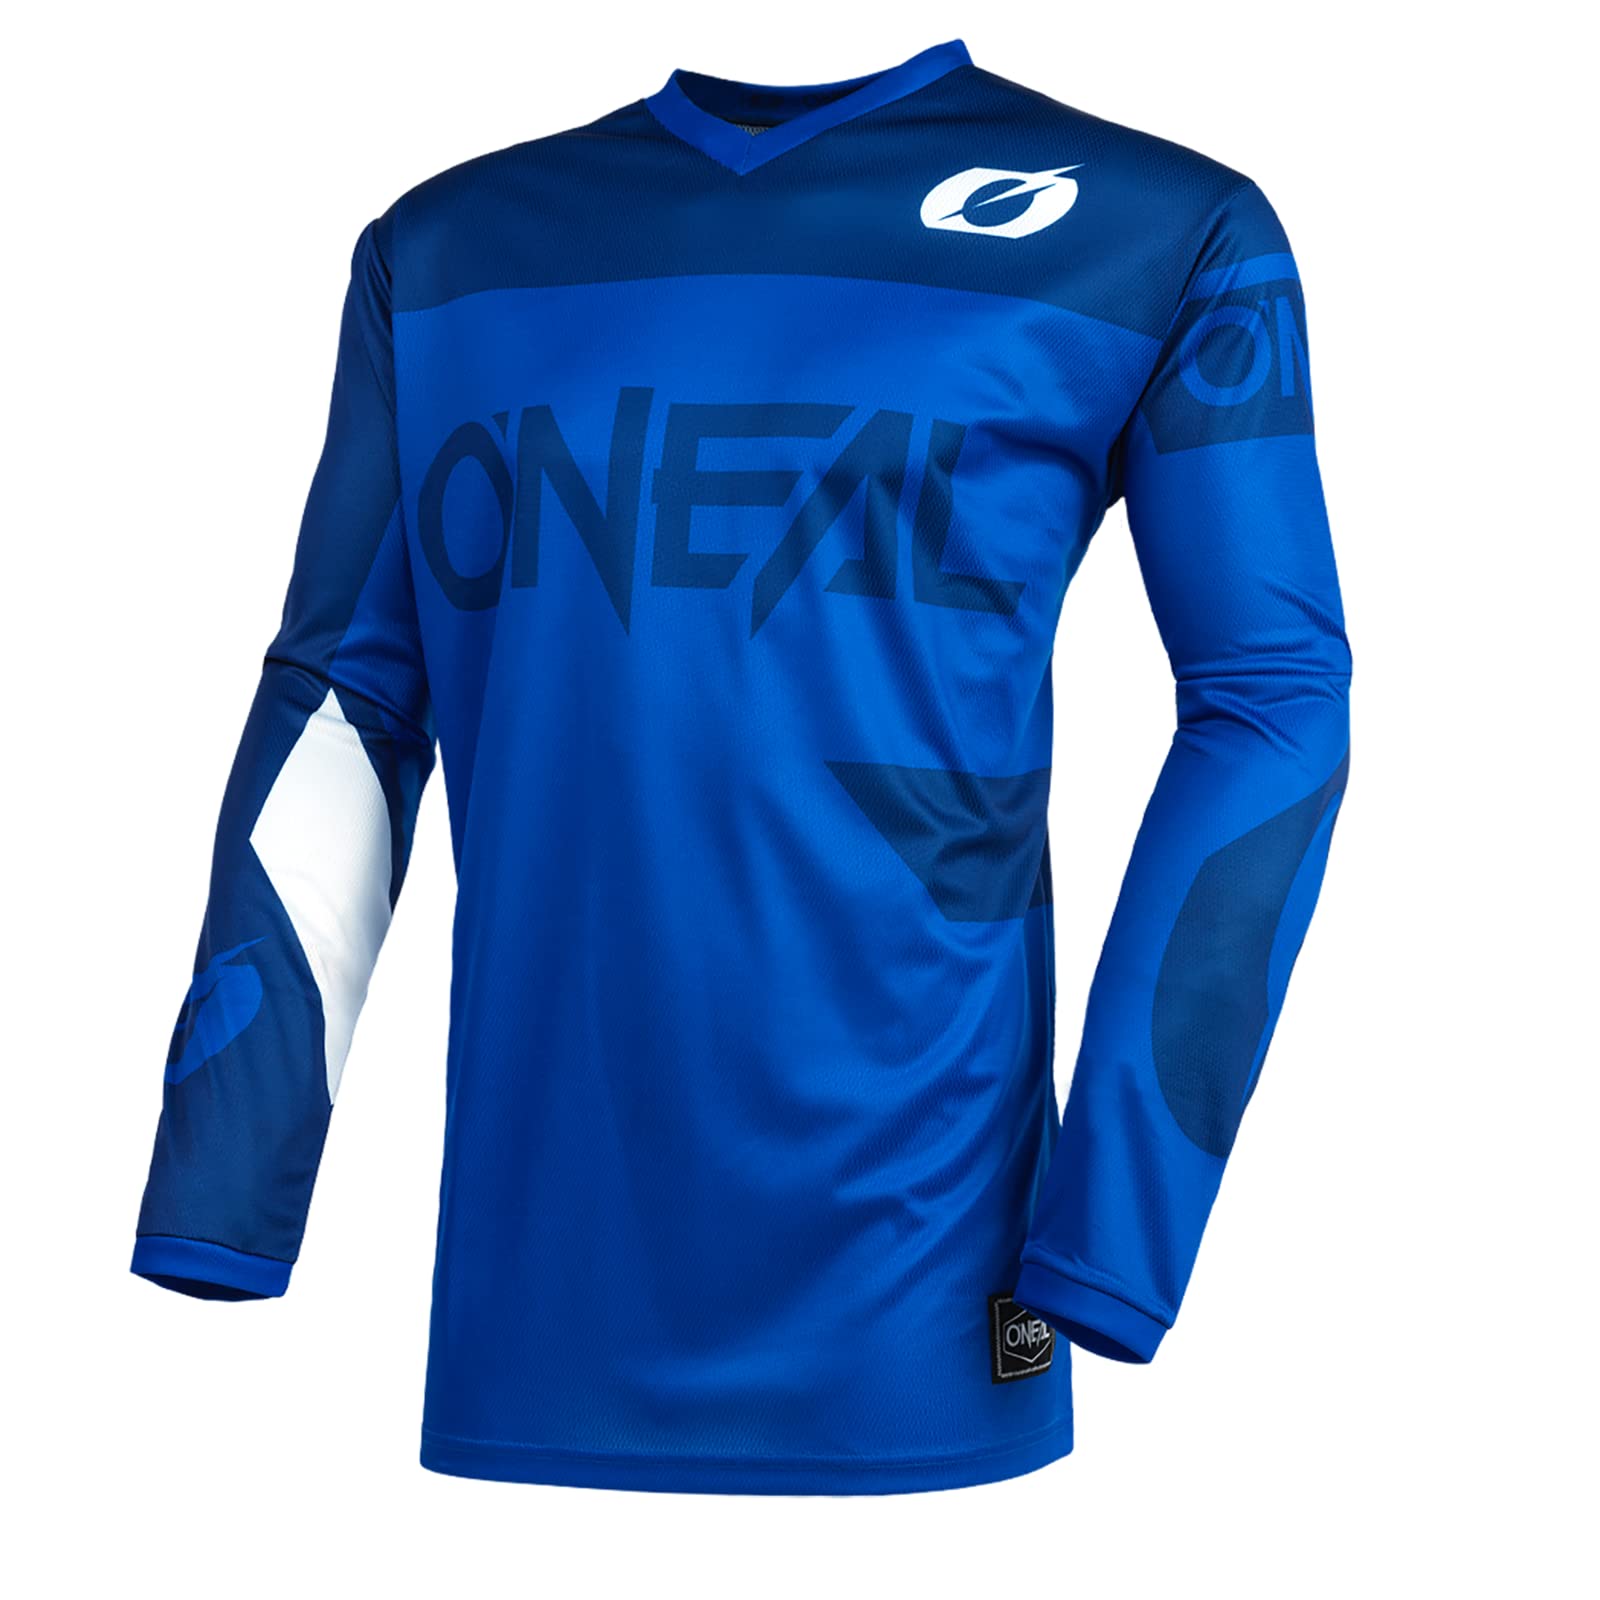 O'NEAL | Motocross-Trikot | Enduro MX | Atmungsaktives Material, Gepolsterter Ellbogenschutz, Passform für maximale Bewegungsfreiheit | Element Jersey Racewear | Erwachsene | Blau | Größe S